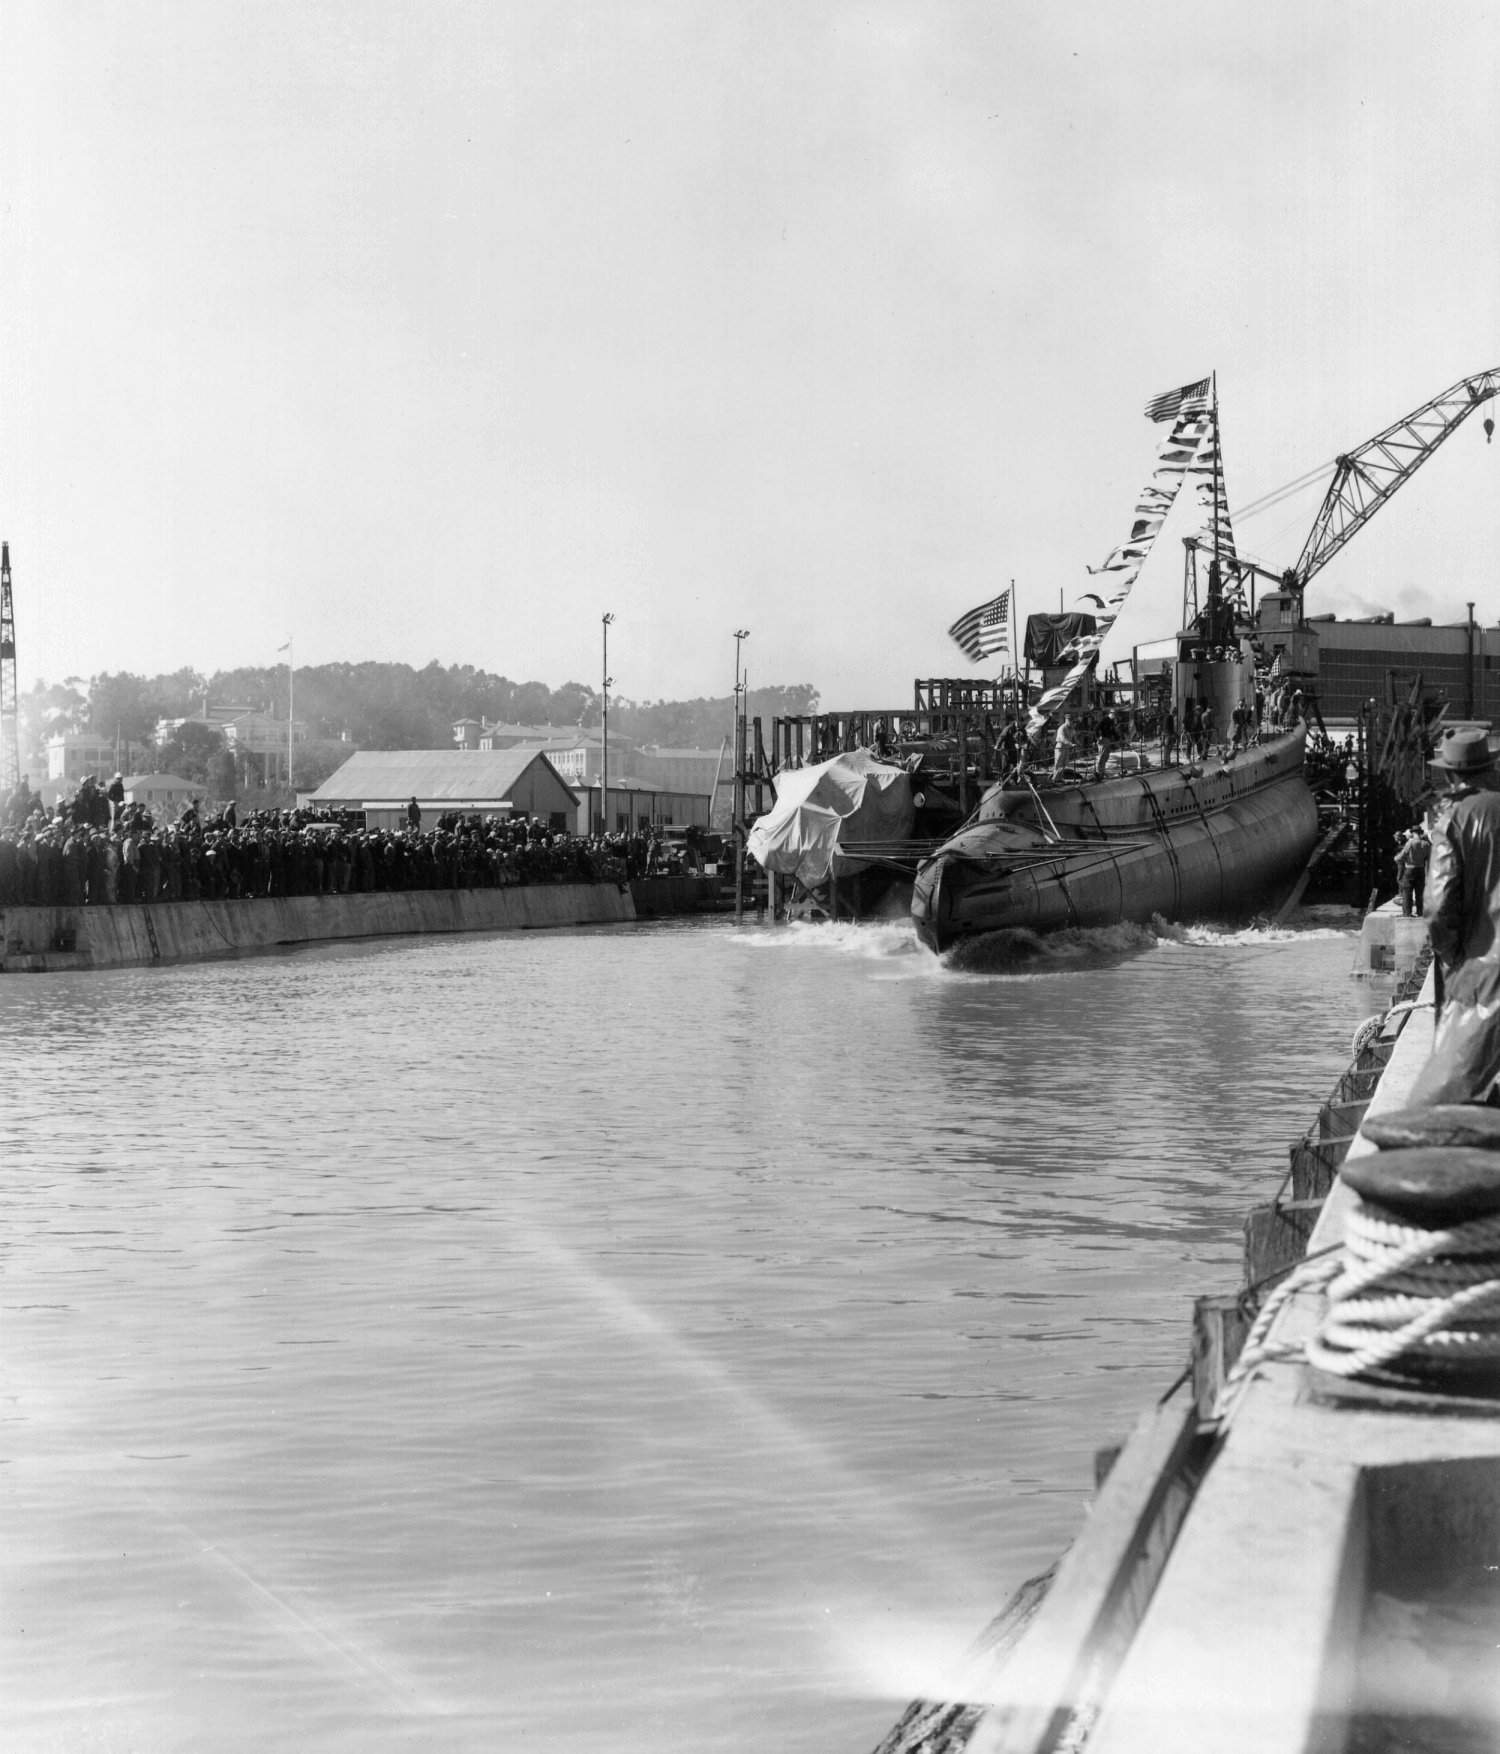 Launching of submarine Wahoo, Mare Island Navy Yard, Vallejo, California, United States, 14 Feb 1942, photo 4 of 4; note submarine Whale nearby